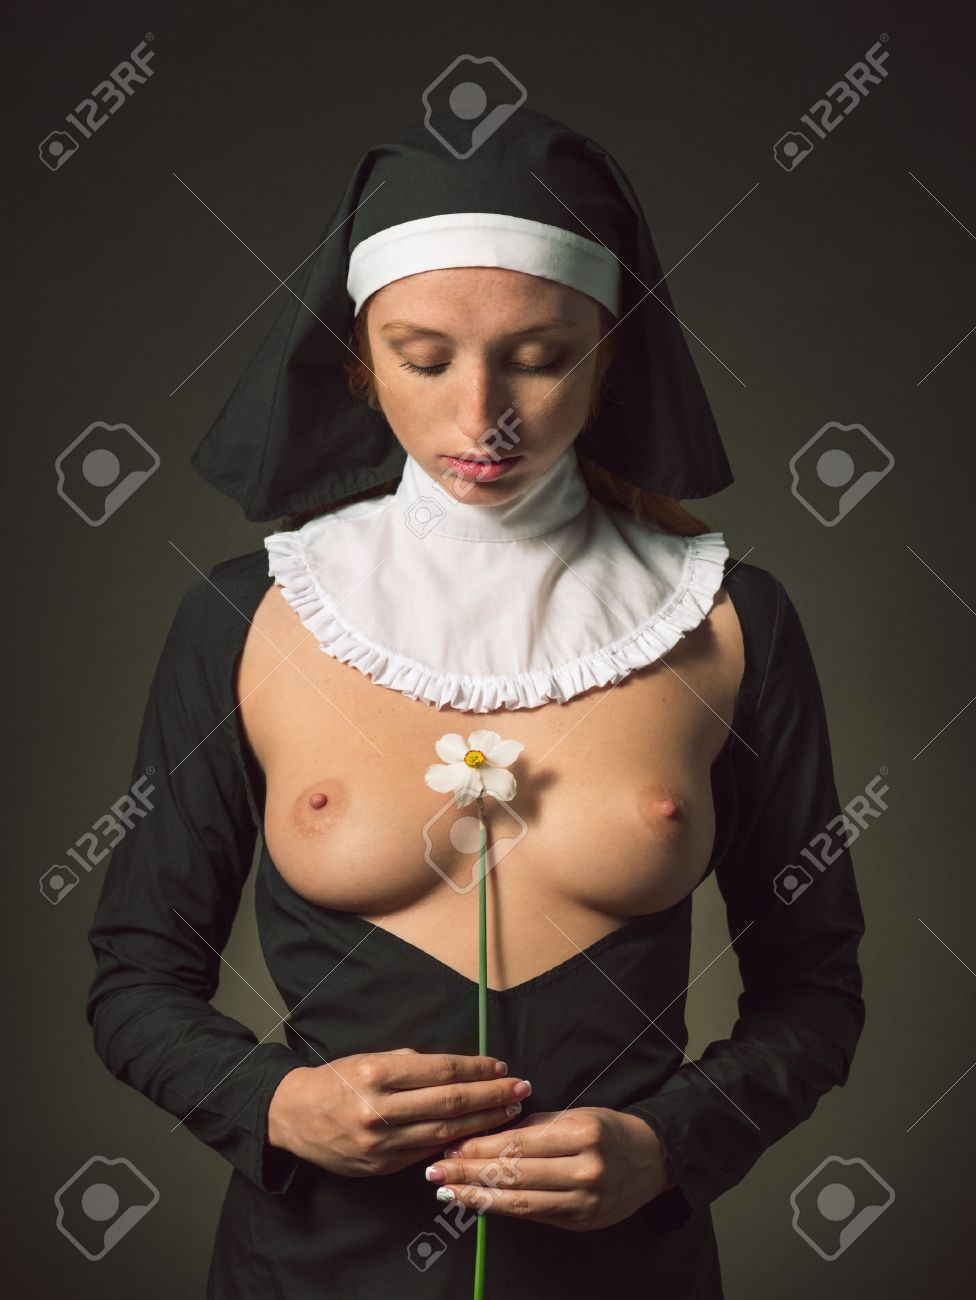 Nude pics of nuns